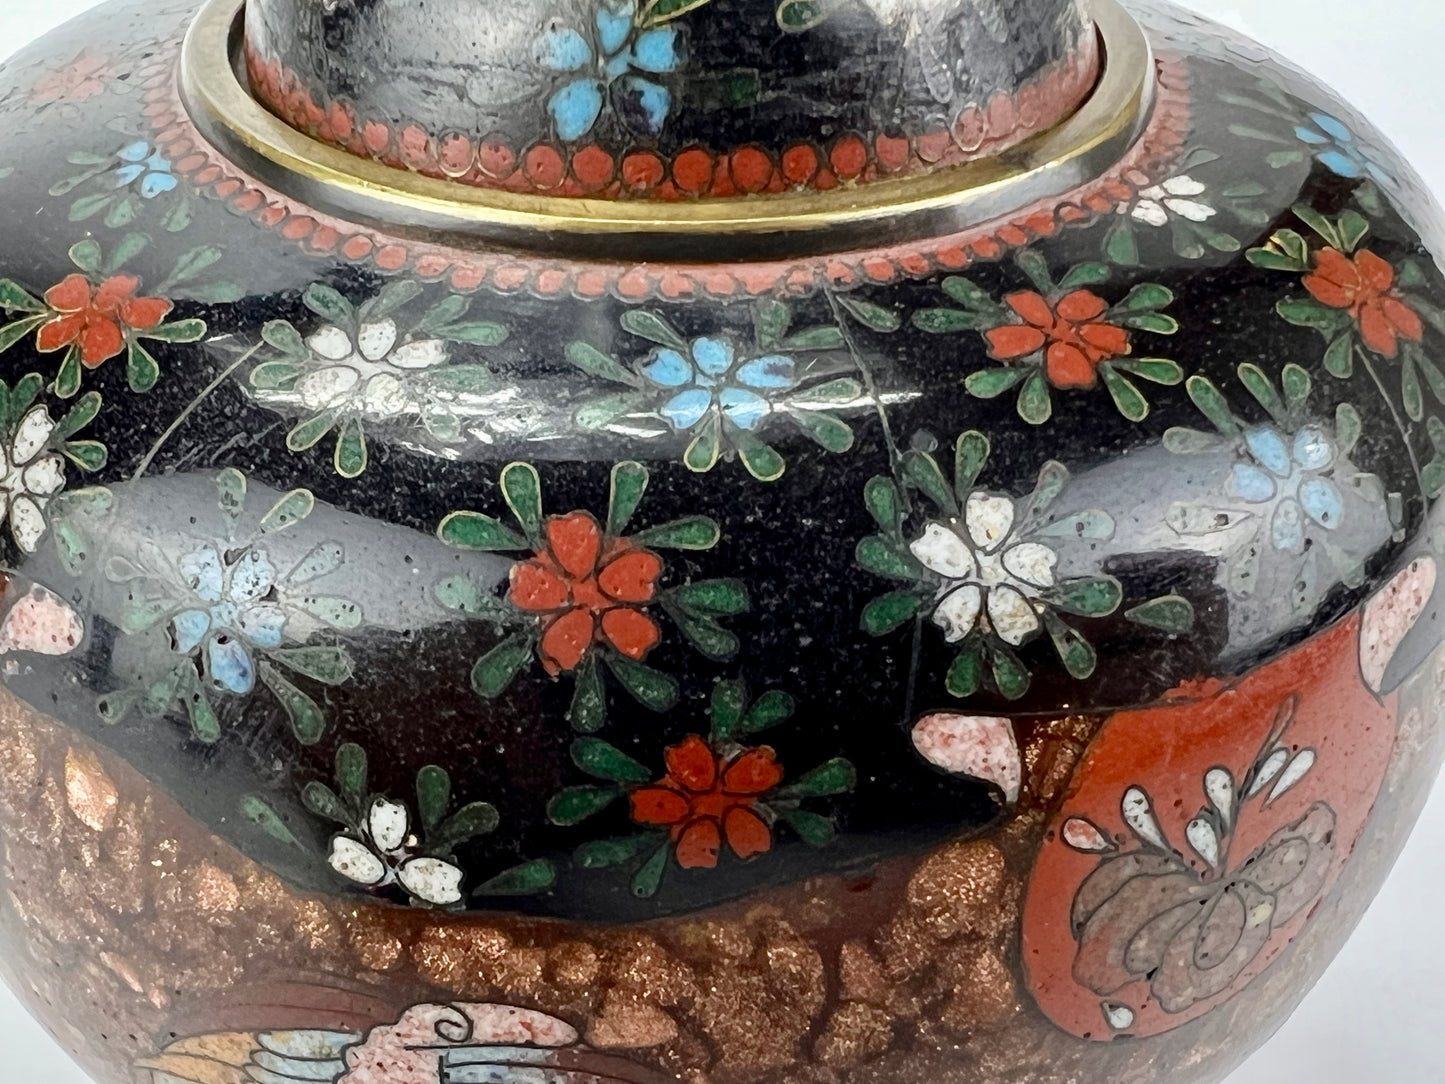 Antique Japanese Meiji Era (late 1800's) Cloisonné Ginger Jar Style 3.5”